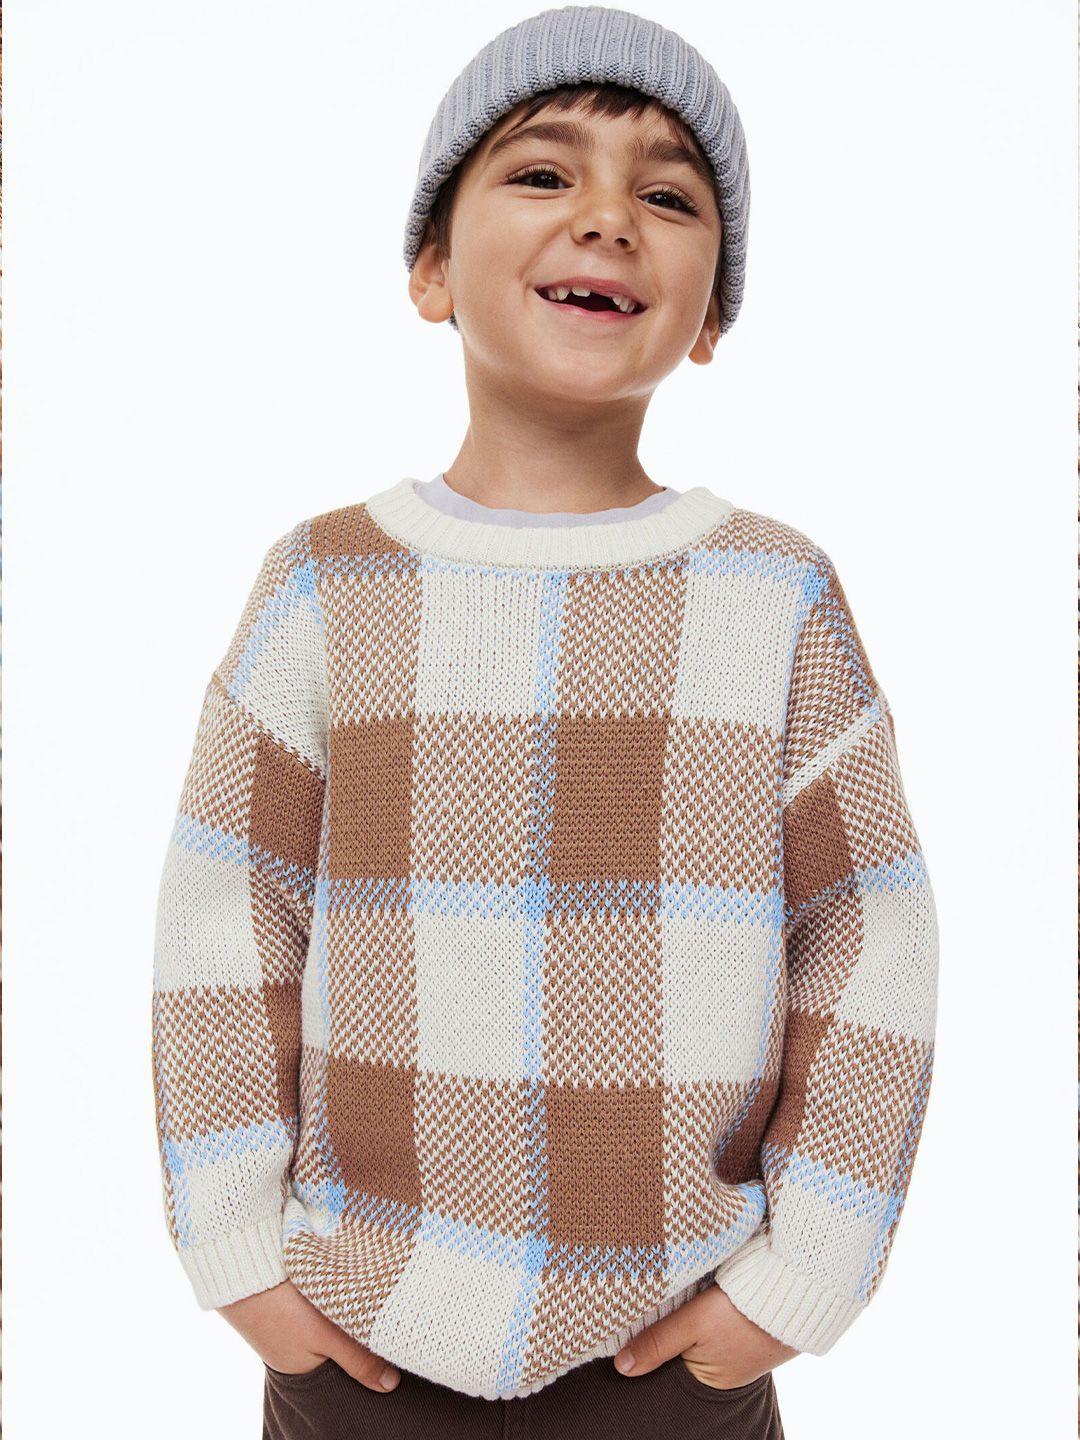 h&m boys jacquard-knit jumper